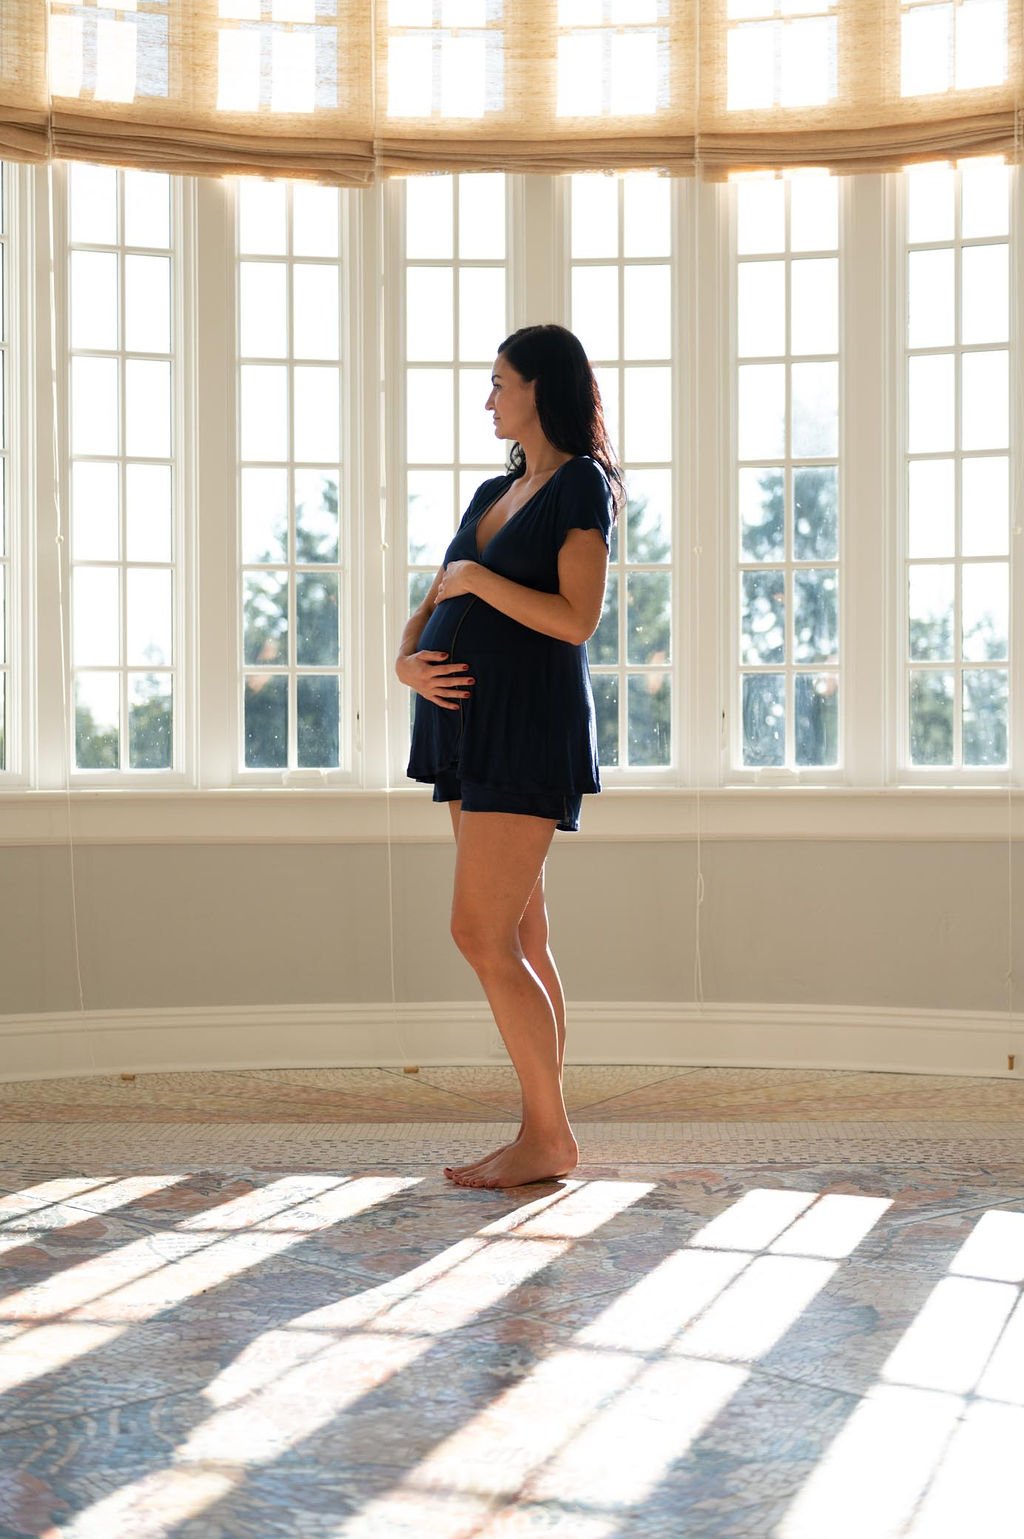 A pregnant woman admiring the view through a large window wearing Pregjama brand maternity loungewear.